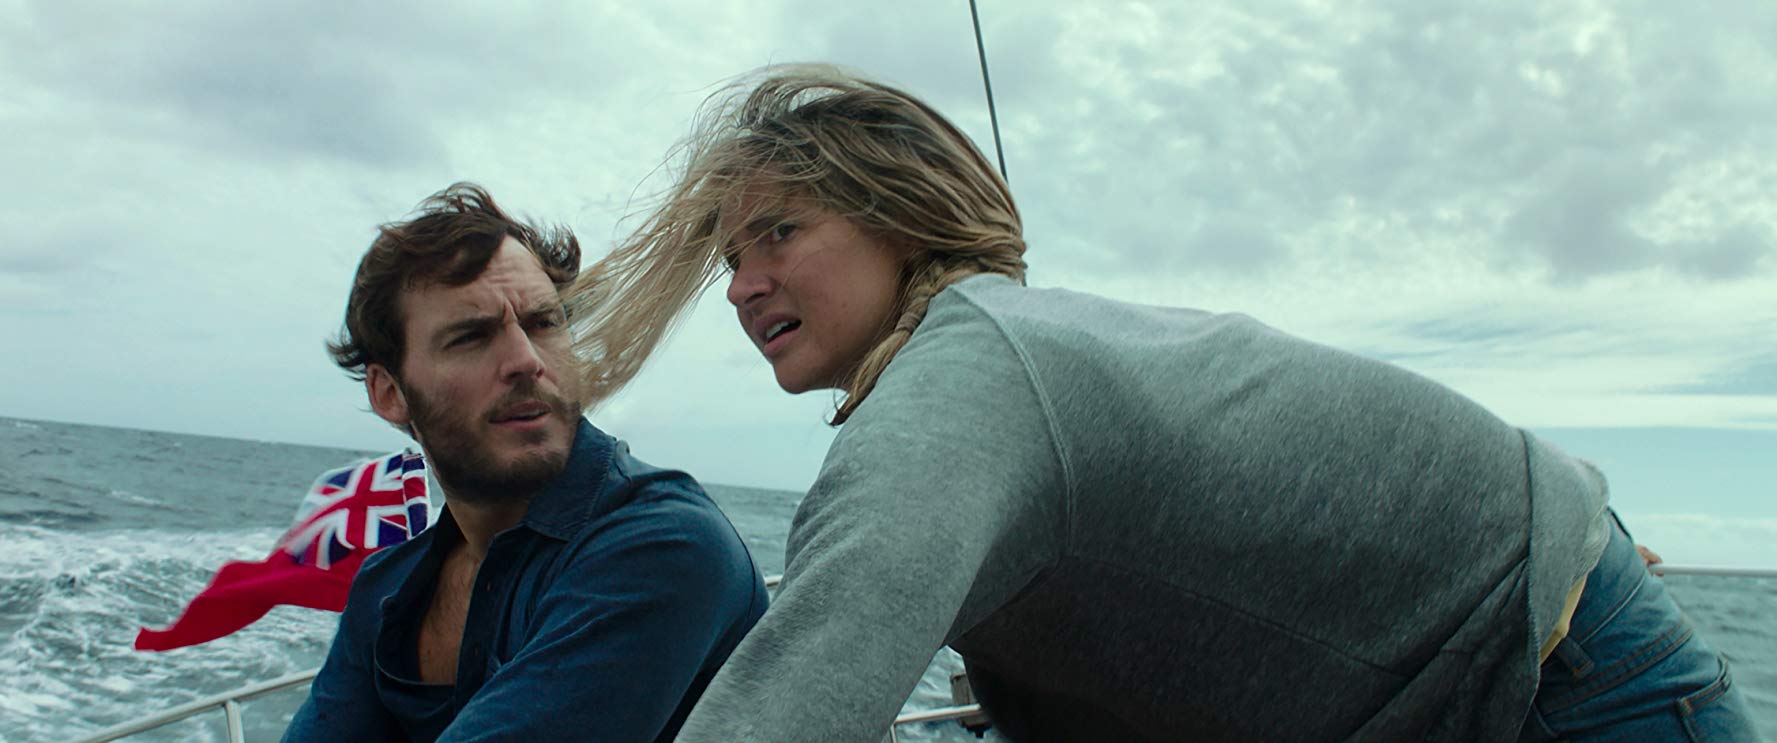 Reseña de la película A la Deriva – Adrift (2018)